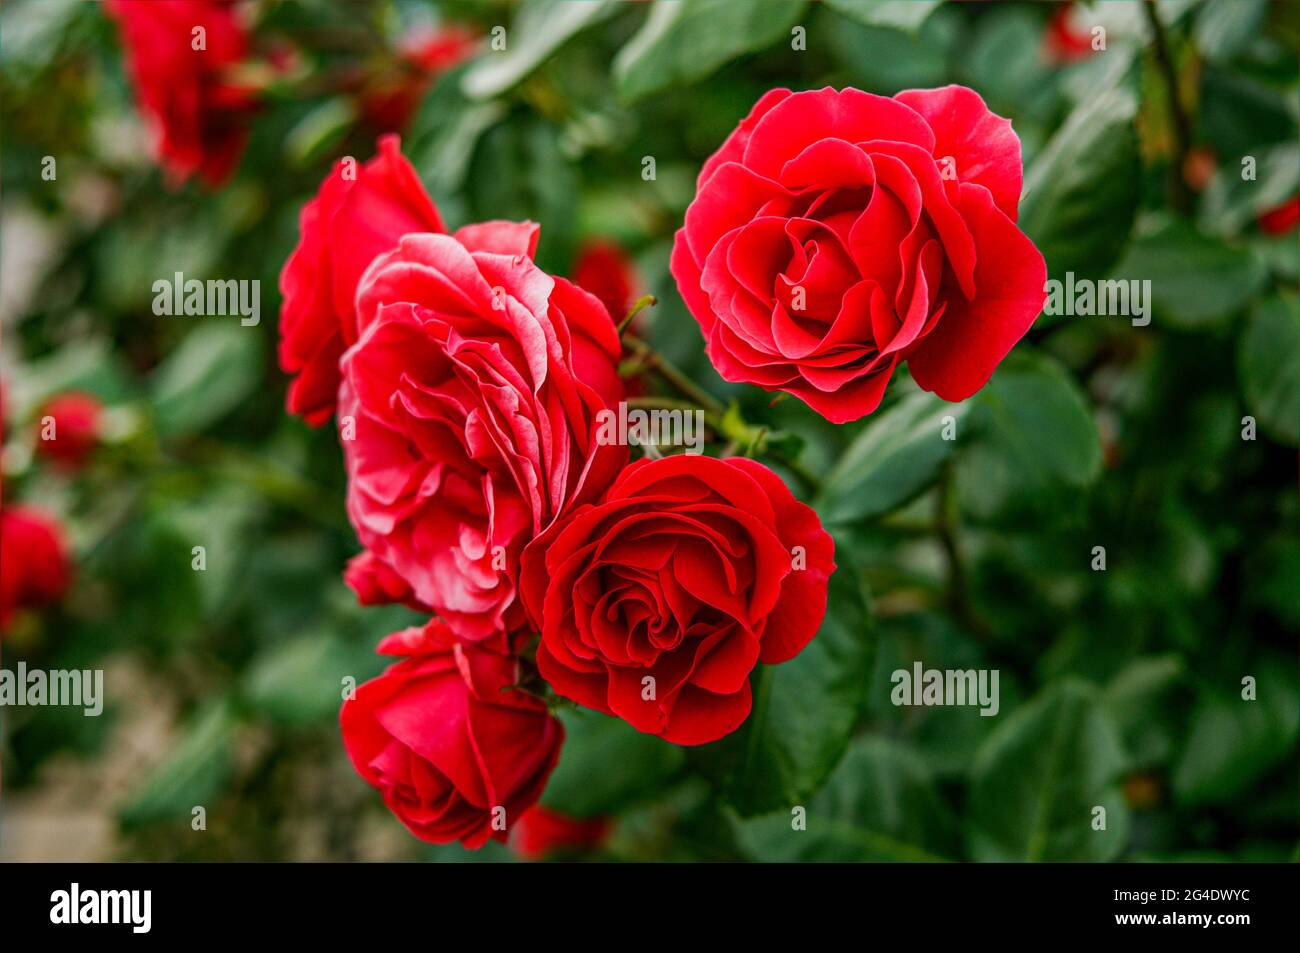 rose rosse, macro, in ambiente naturale, cespuglio con fiori di rosa rossa Foto Stock